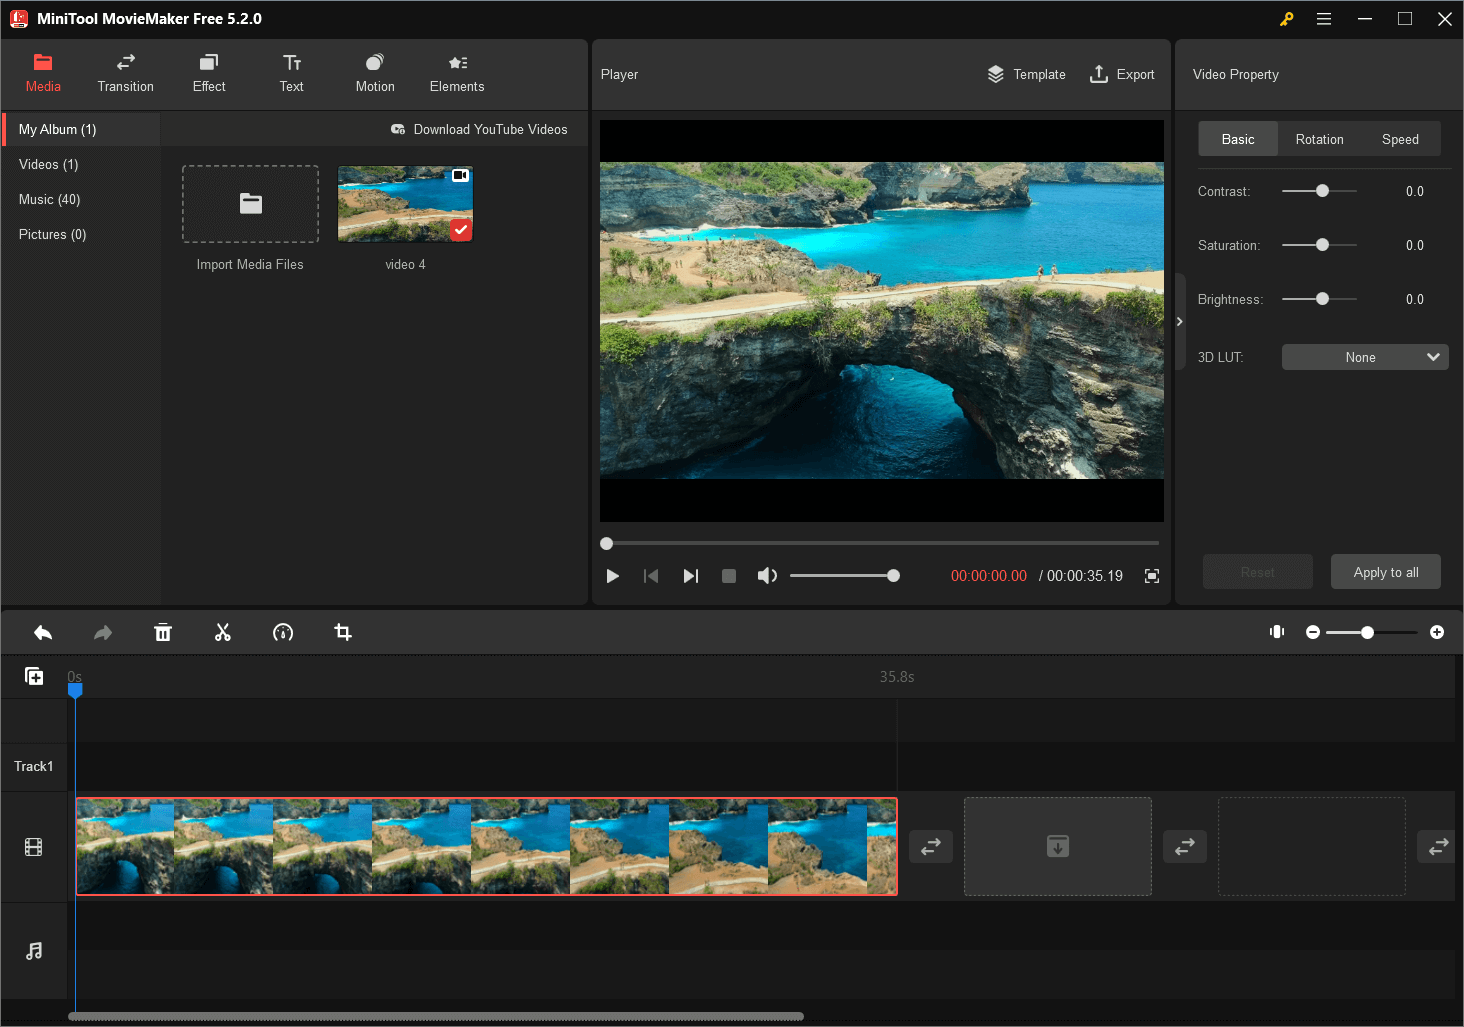 MiniTool MovieMaker can edit MP4 video